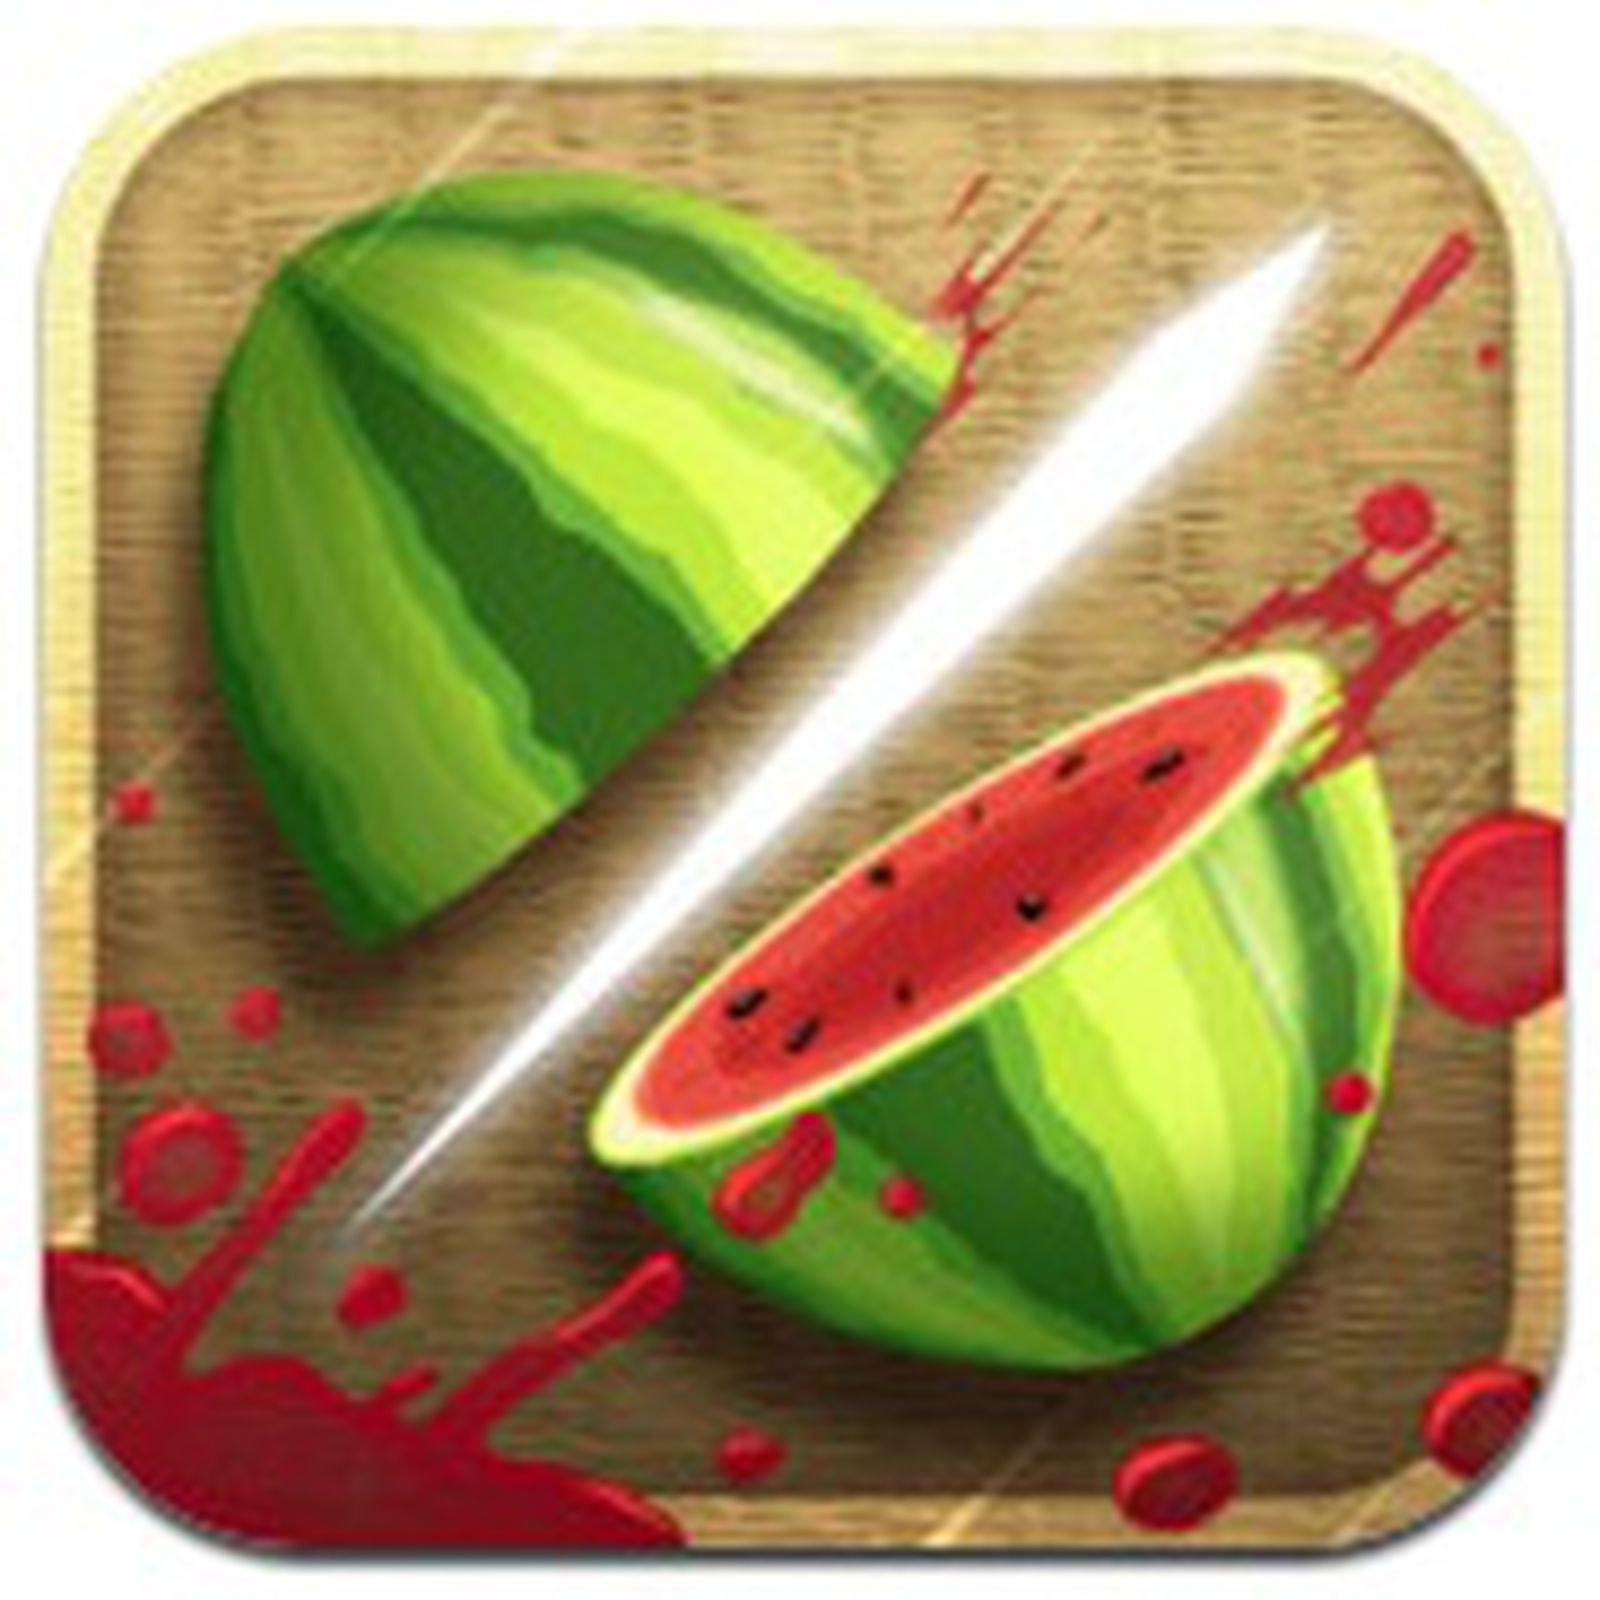 Halfbrick's 'Fruit Ninja' Named App of the Week, Available for Free -  MacRumors